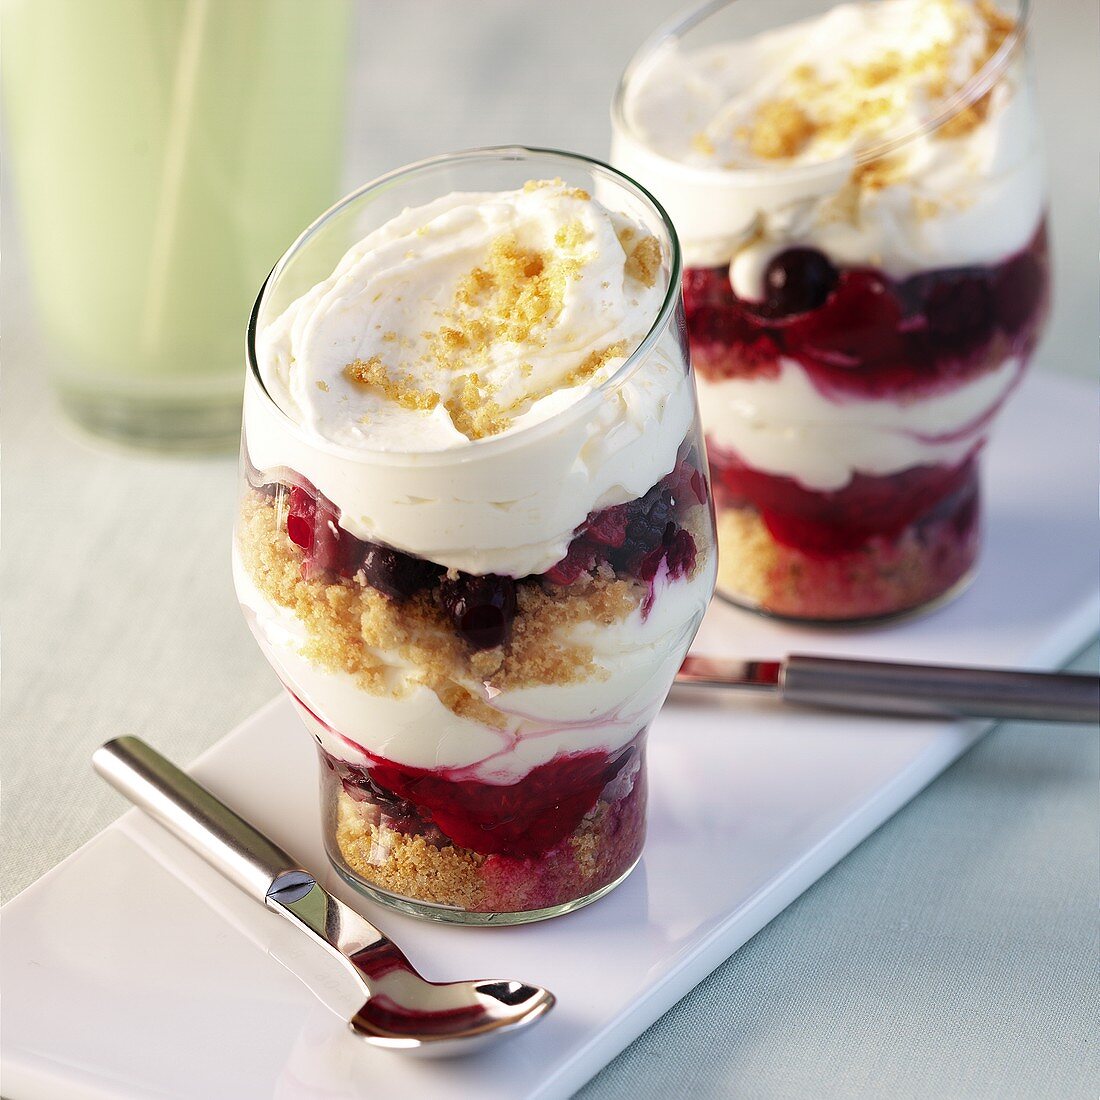 Layered dessert with raspberry crumble and cream